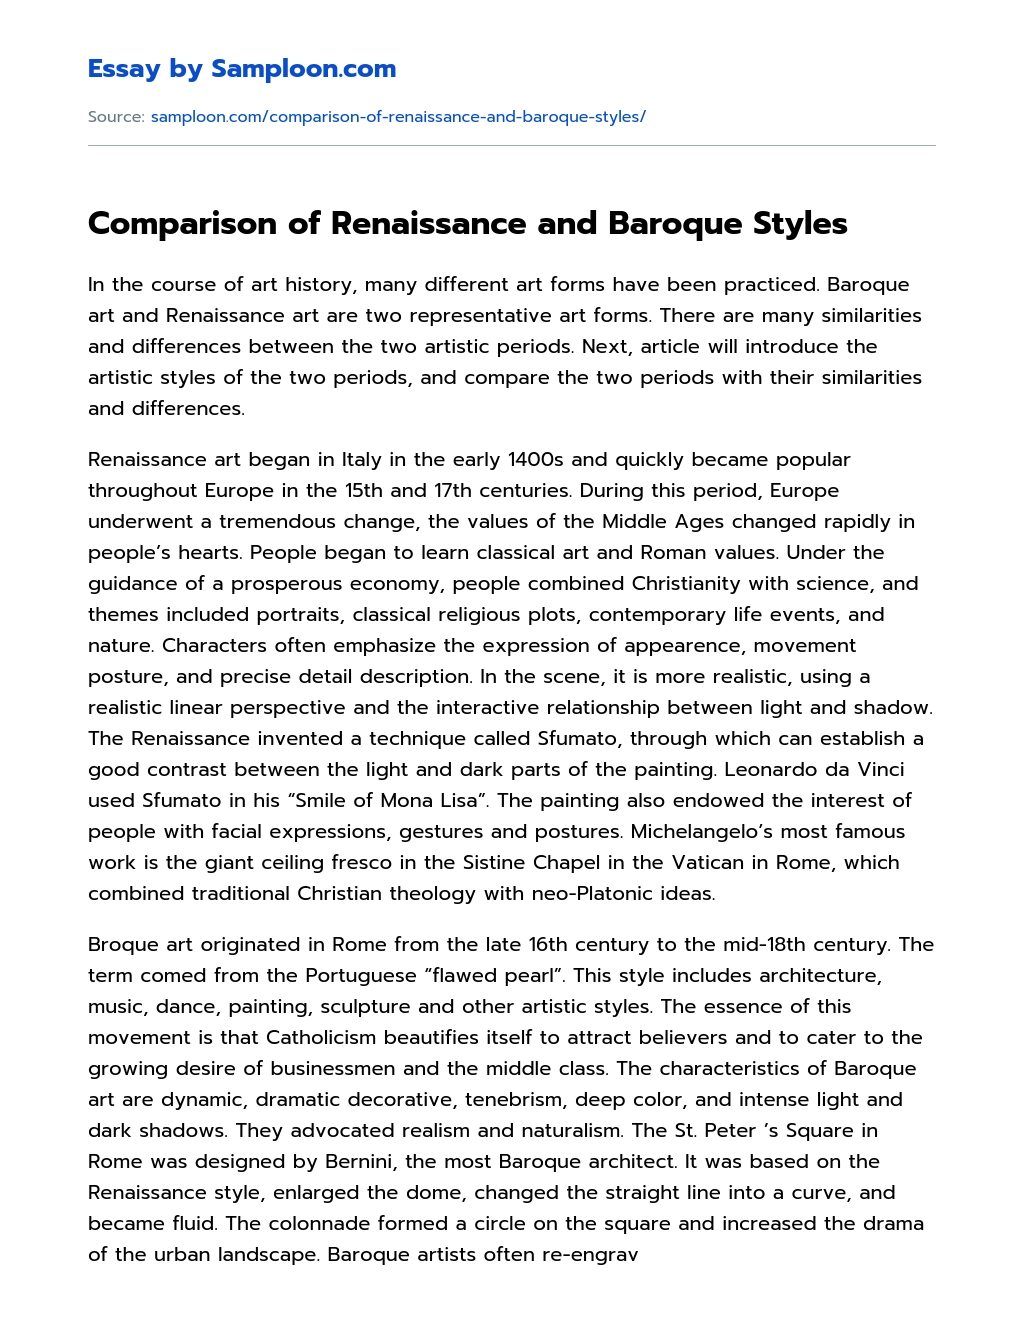 Comparison of Renaissance and Baroque Styles essay